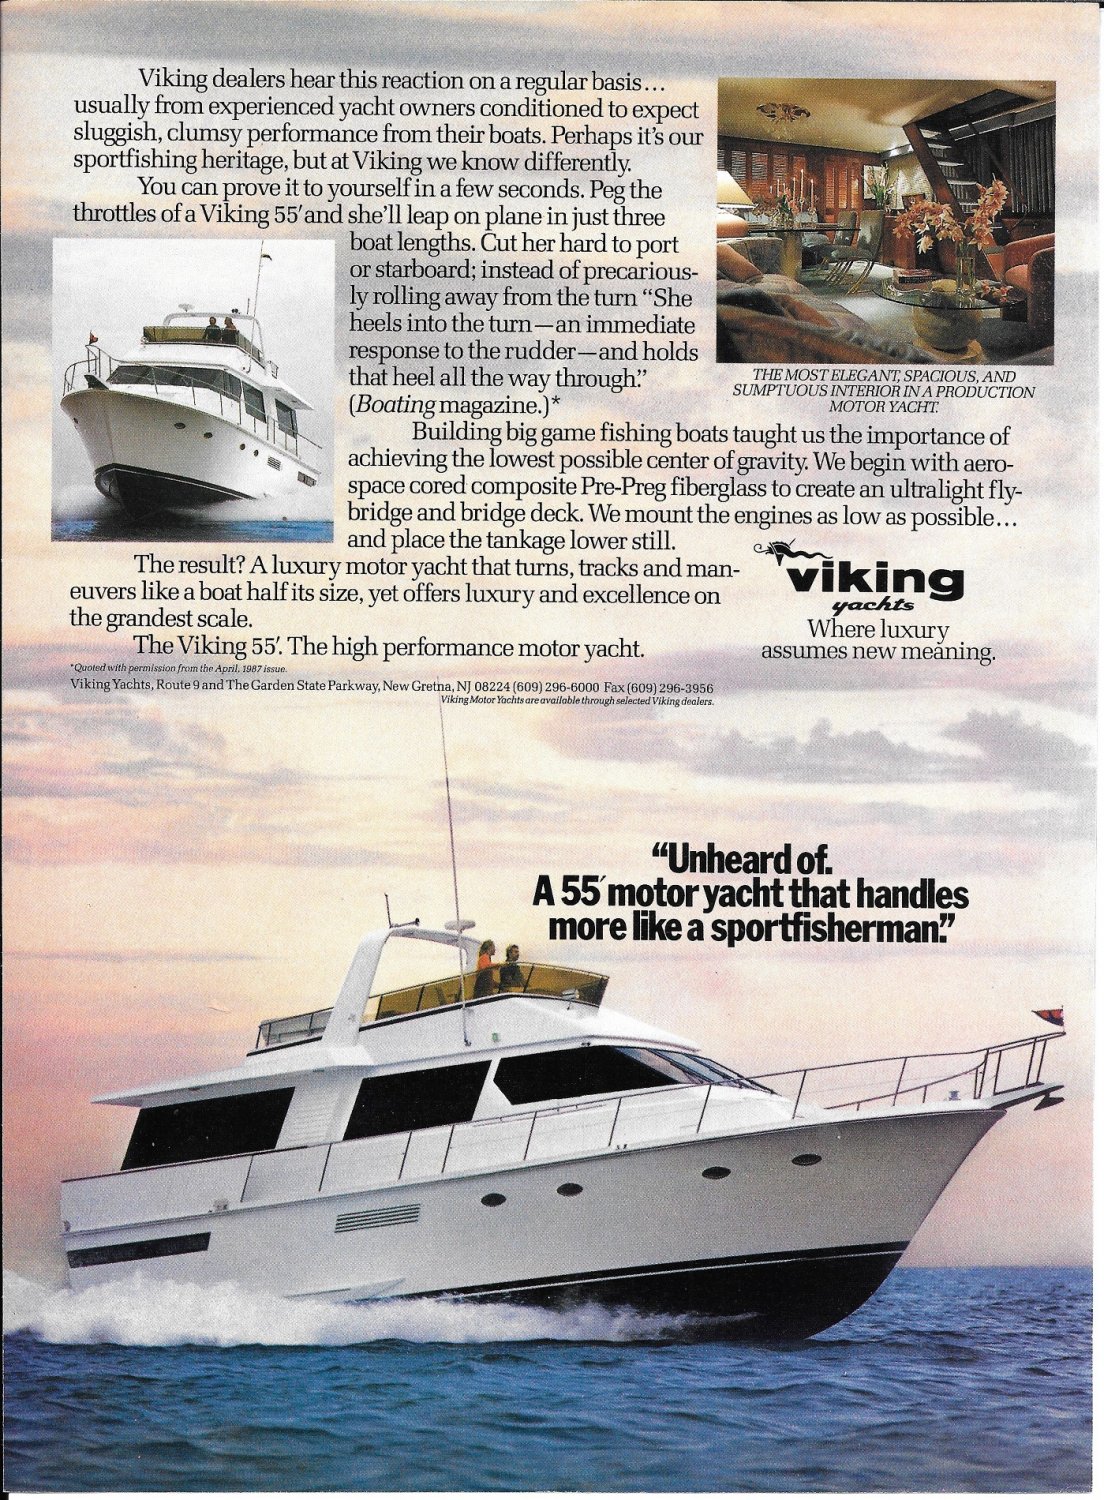 1988 viking 55 motor yacht